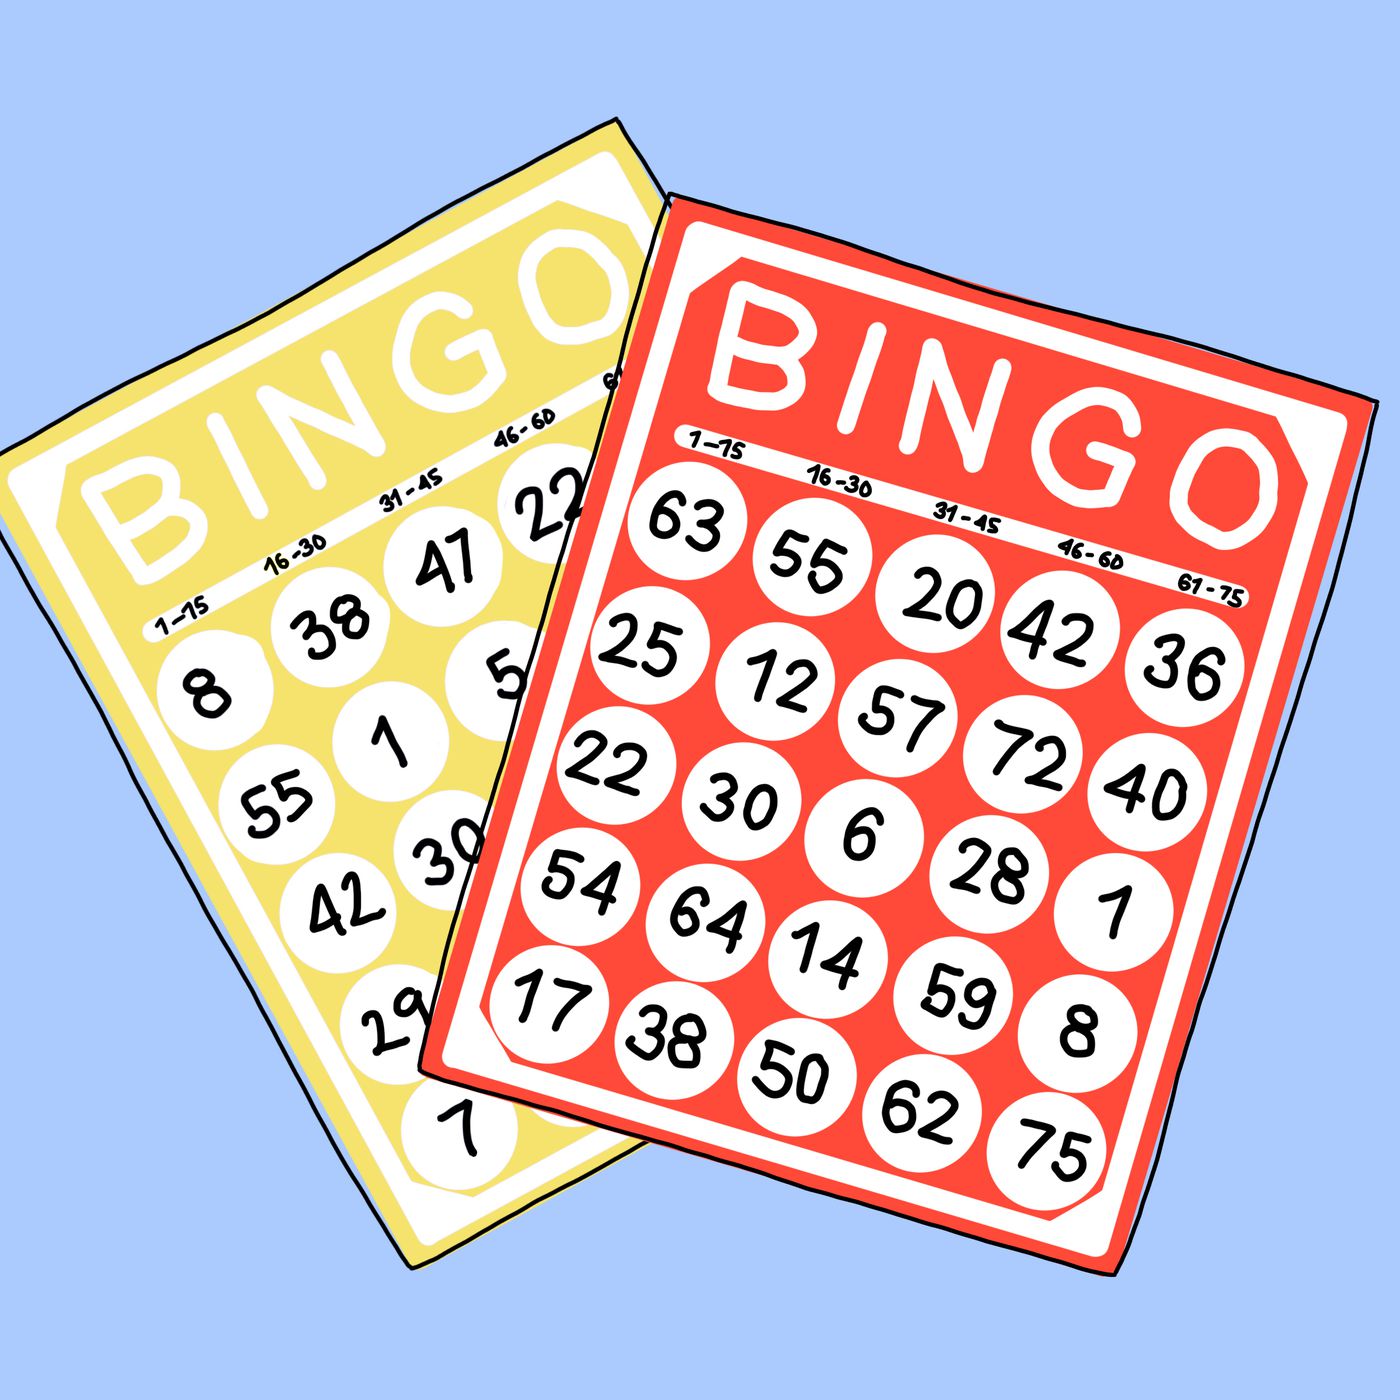 Bingo hall games: The best money Rachel Kramer Bussel ever.